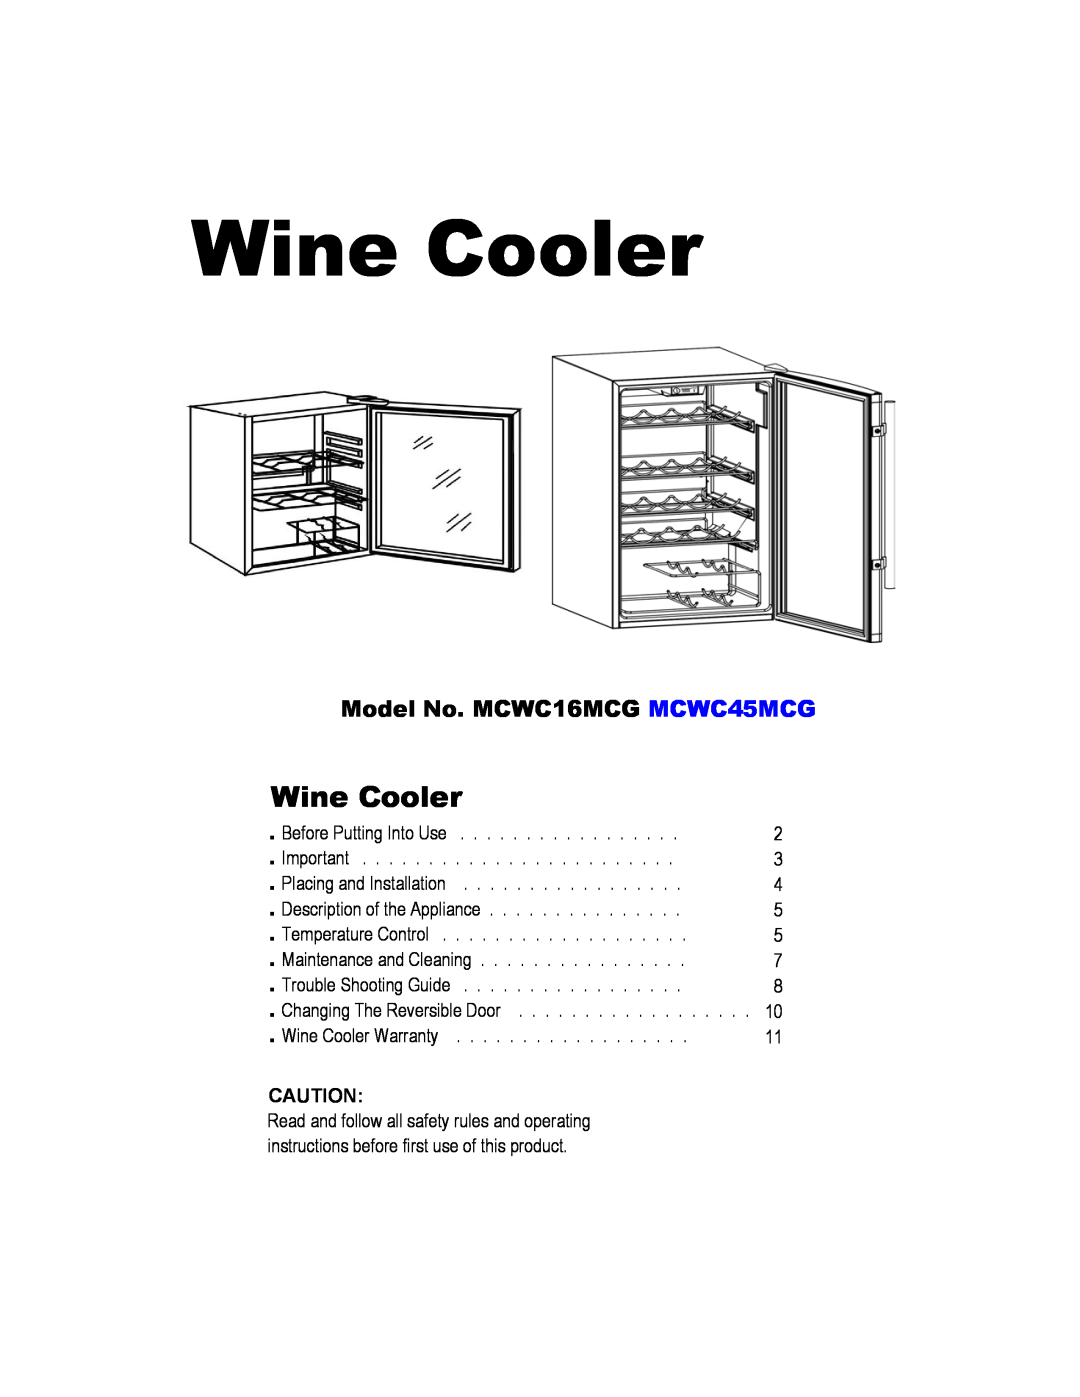 Magic Chef warranty Wine Cooler, Model No. MCWC16MCG MCWC45MCG 